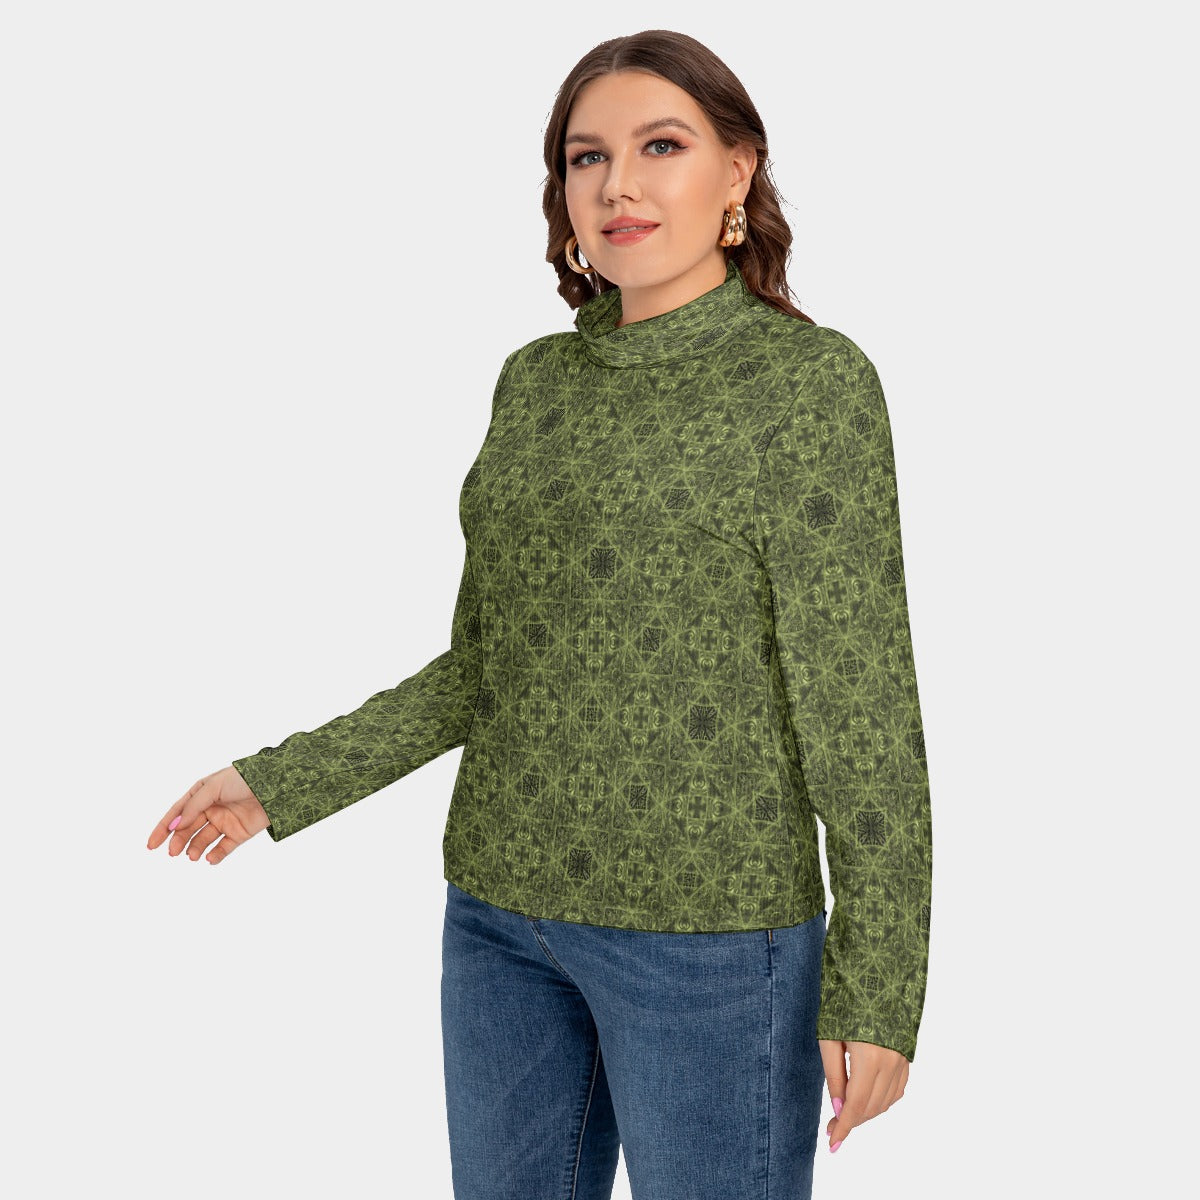 Plus Size Long Sleeve Turtleneck Shirt for Women - Elegant Comfort by Veronica Suarez Art